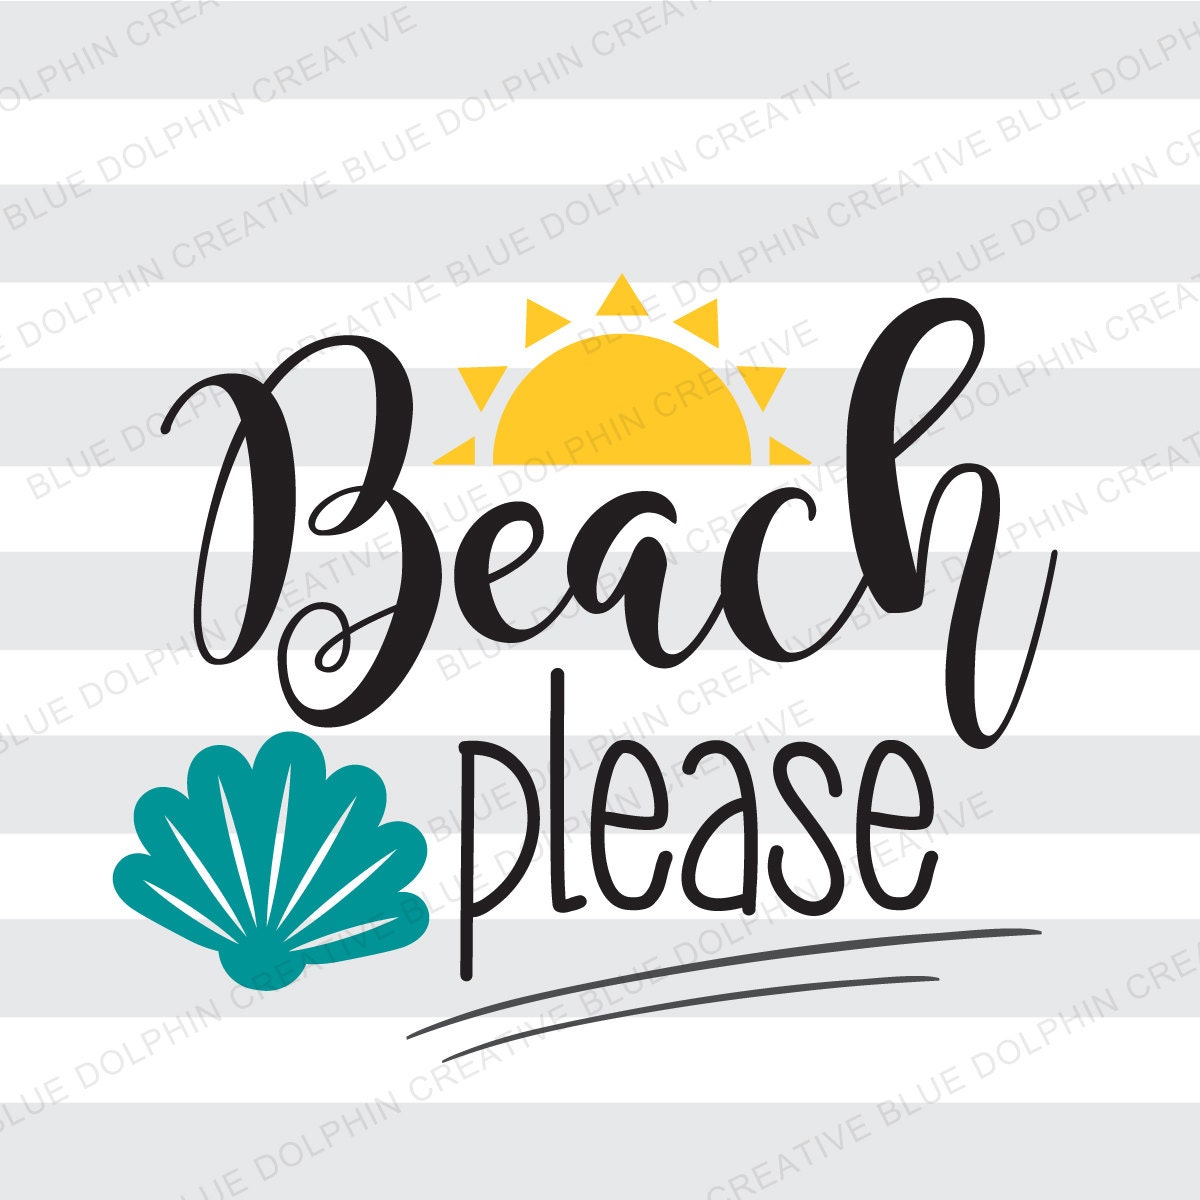 Download Beach Please SVG png pdf / Cricut Silhouette cutting files